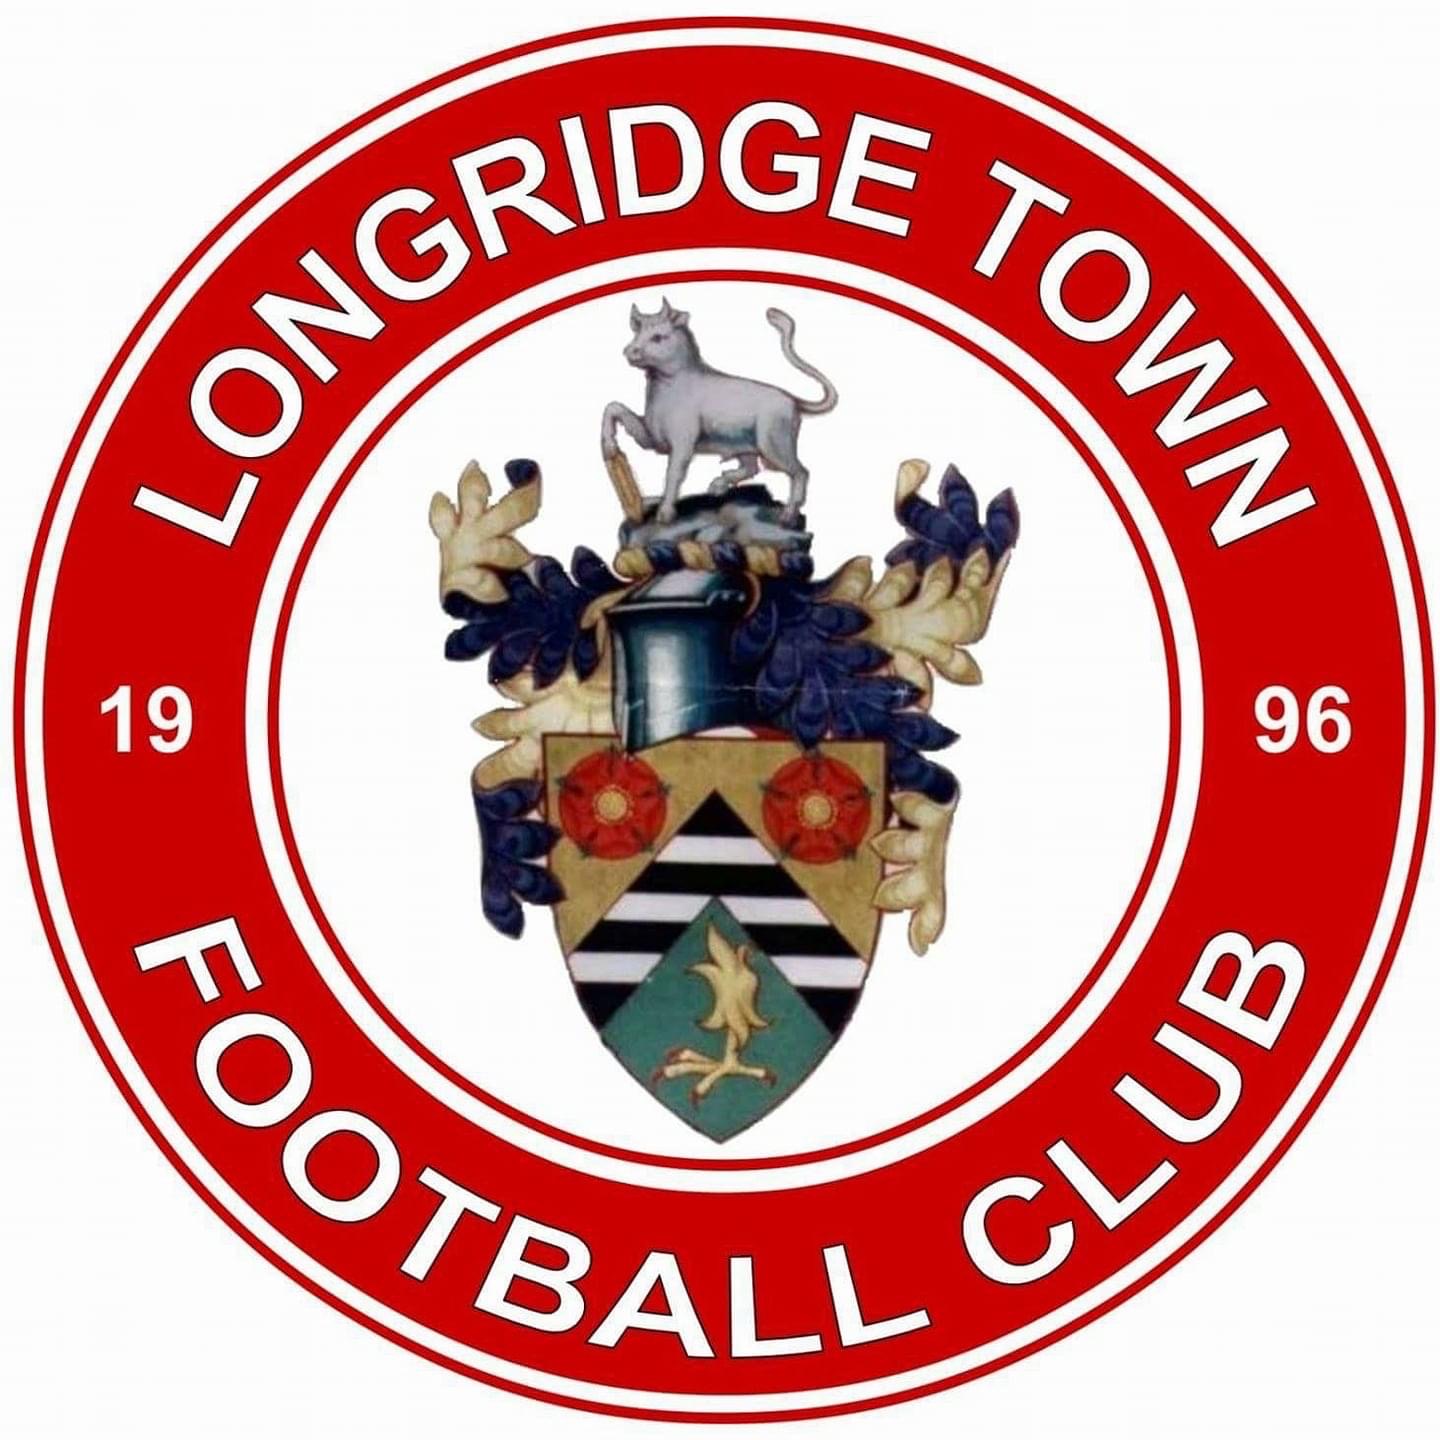 Longridge Town Football Club